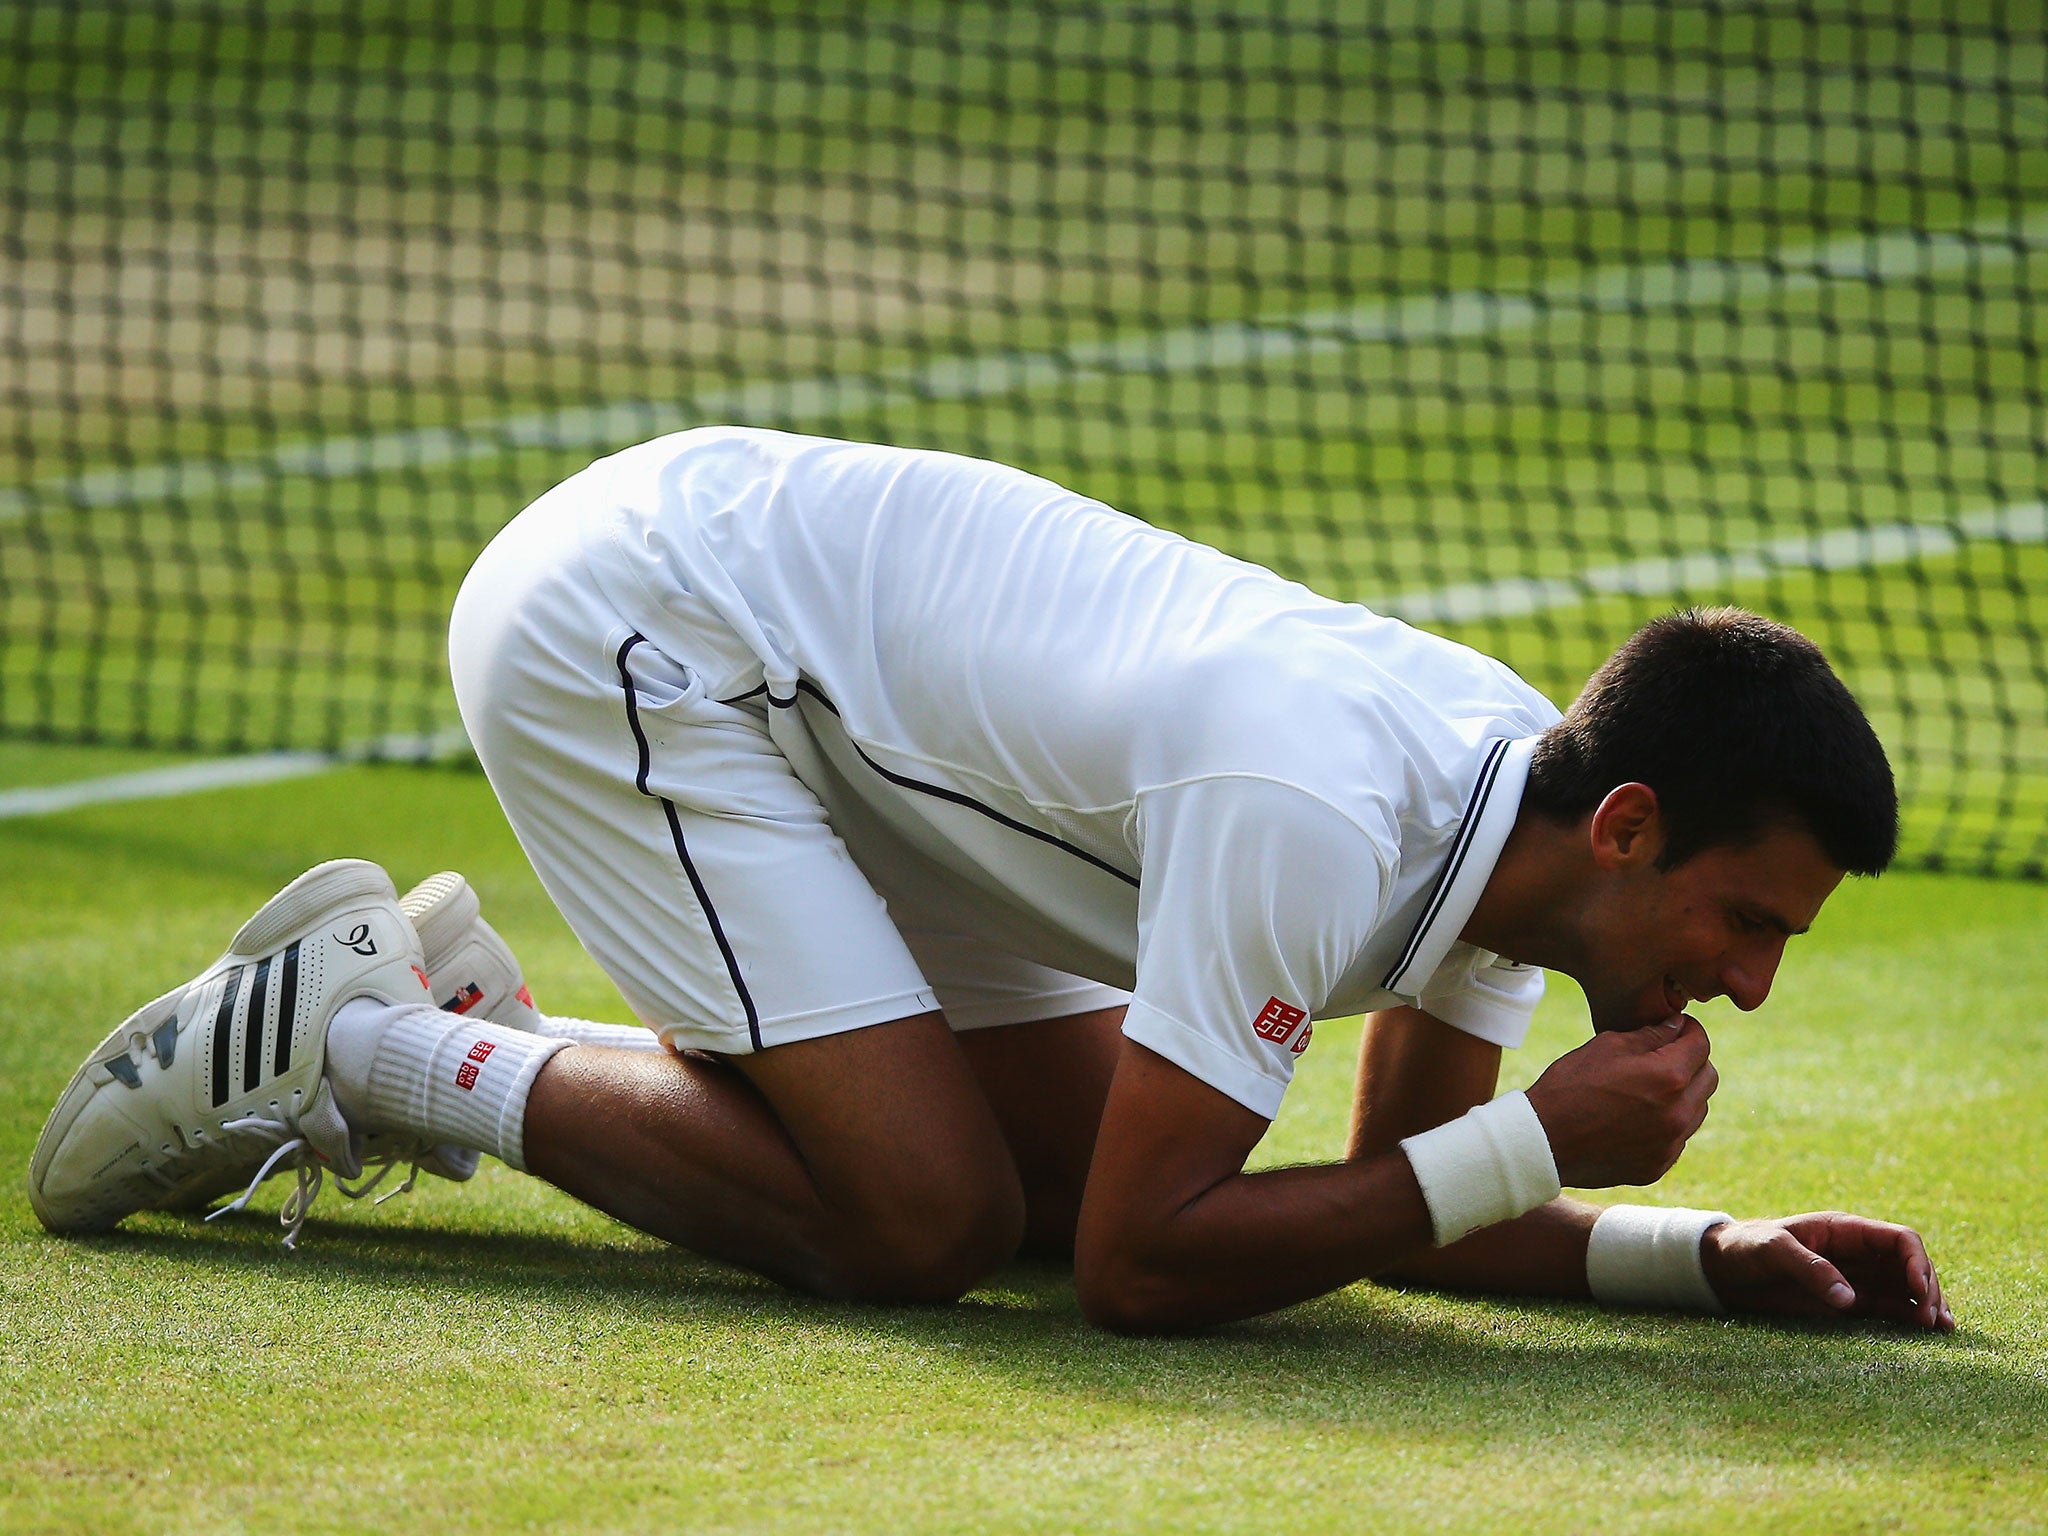 Djokovic drops to his knees in celebration